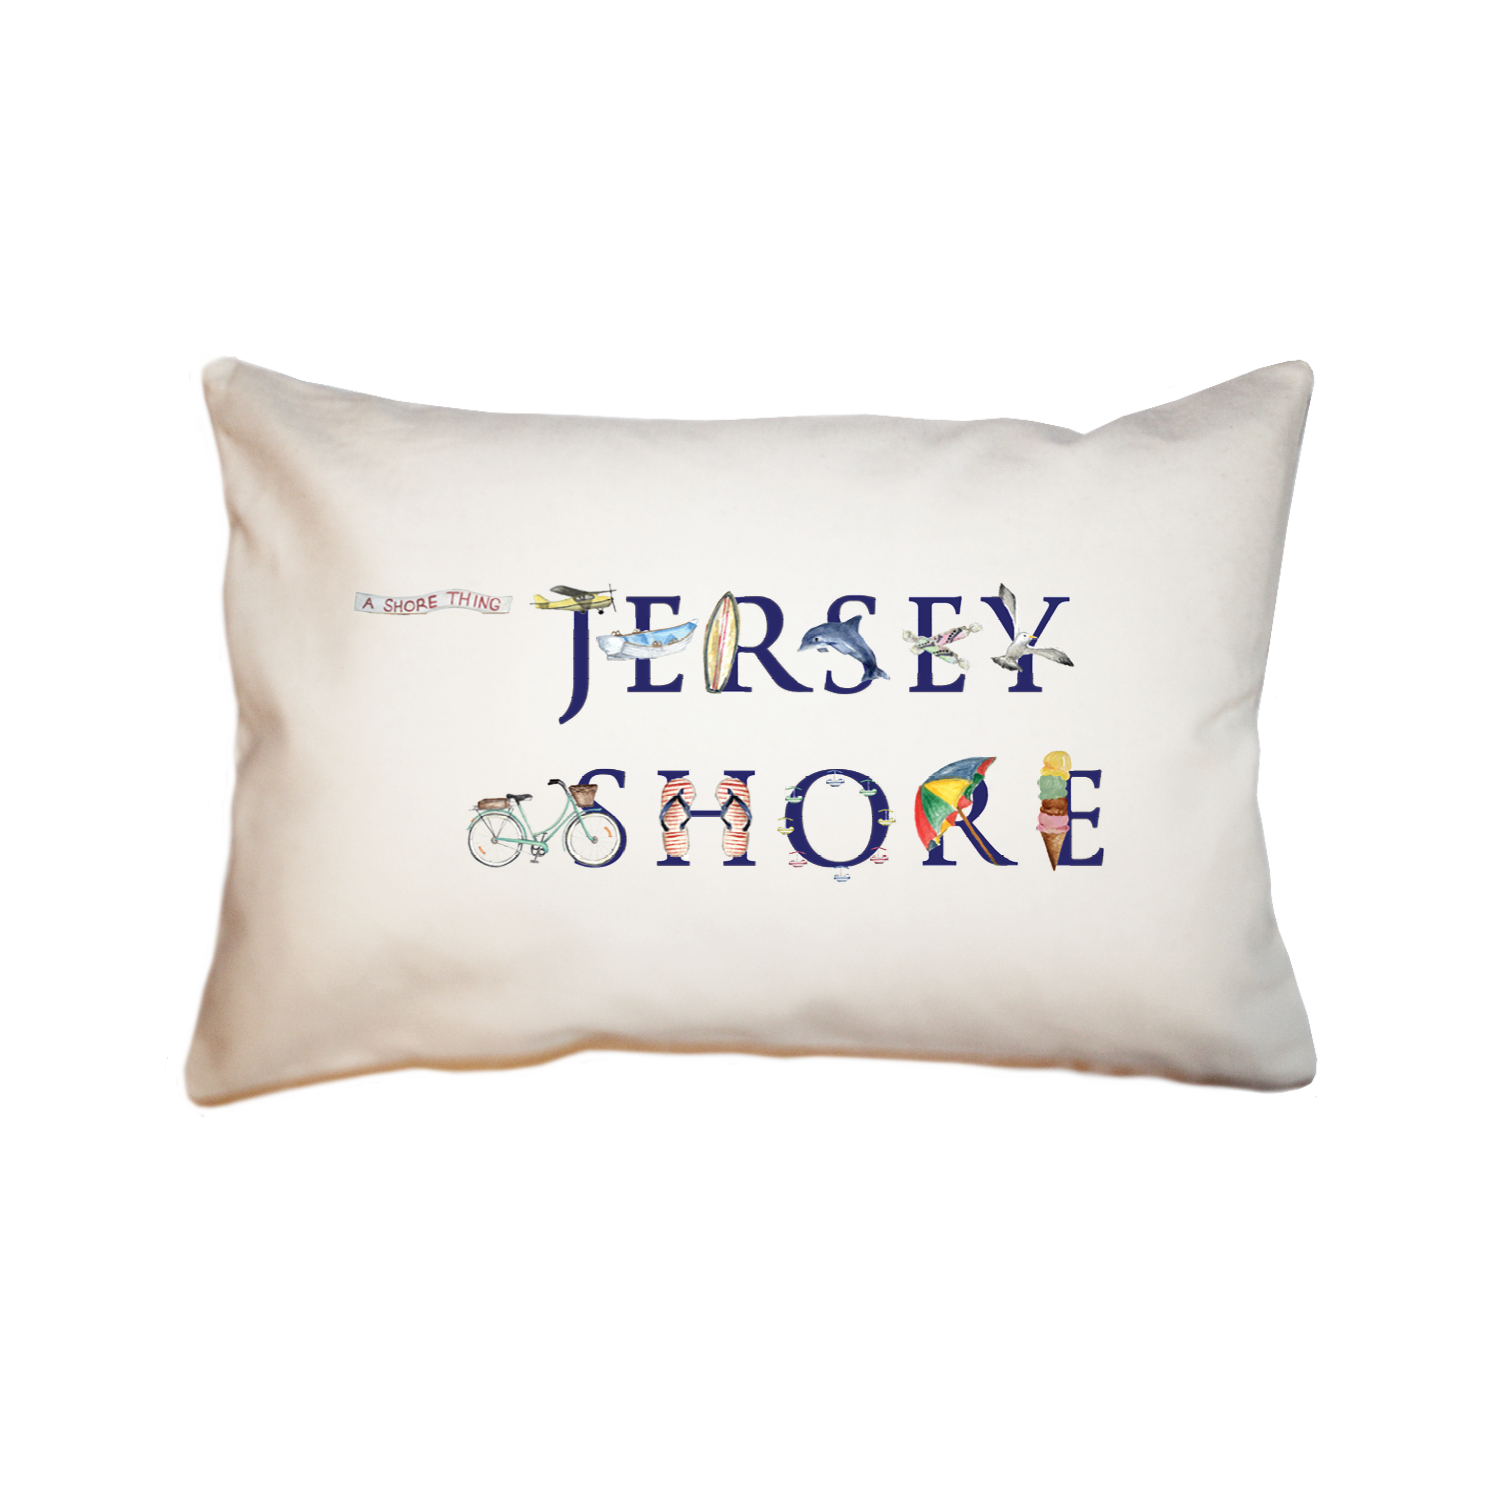 jersey shore large rectangle pillow